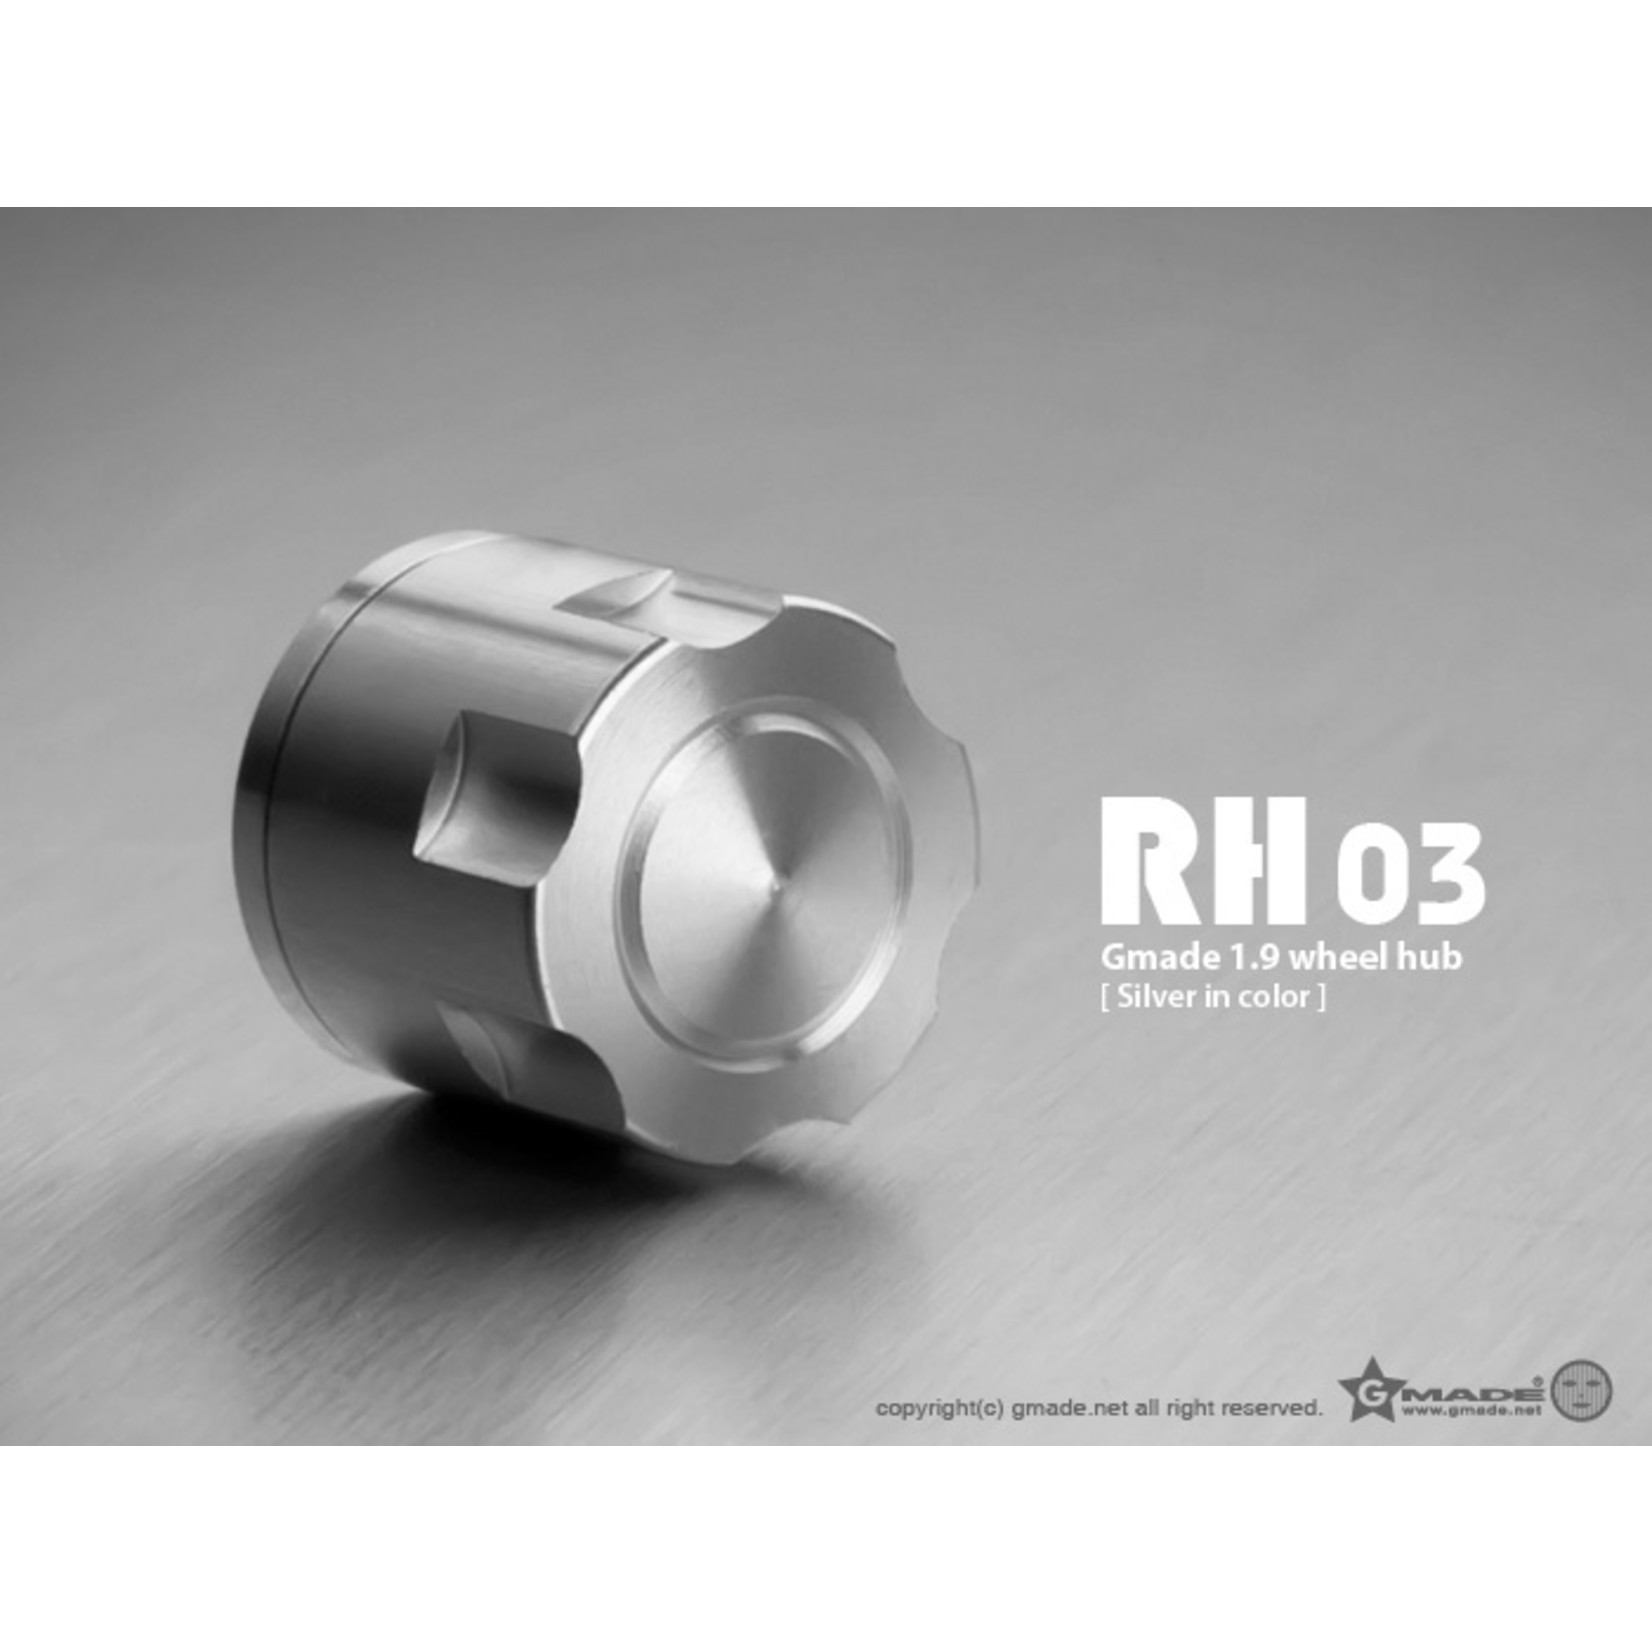 Gmade 1.9 RH03 Wheel Hubs (Silver) (4)